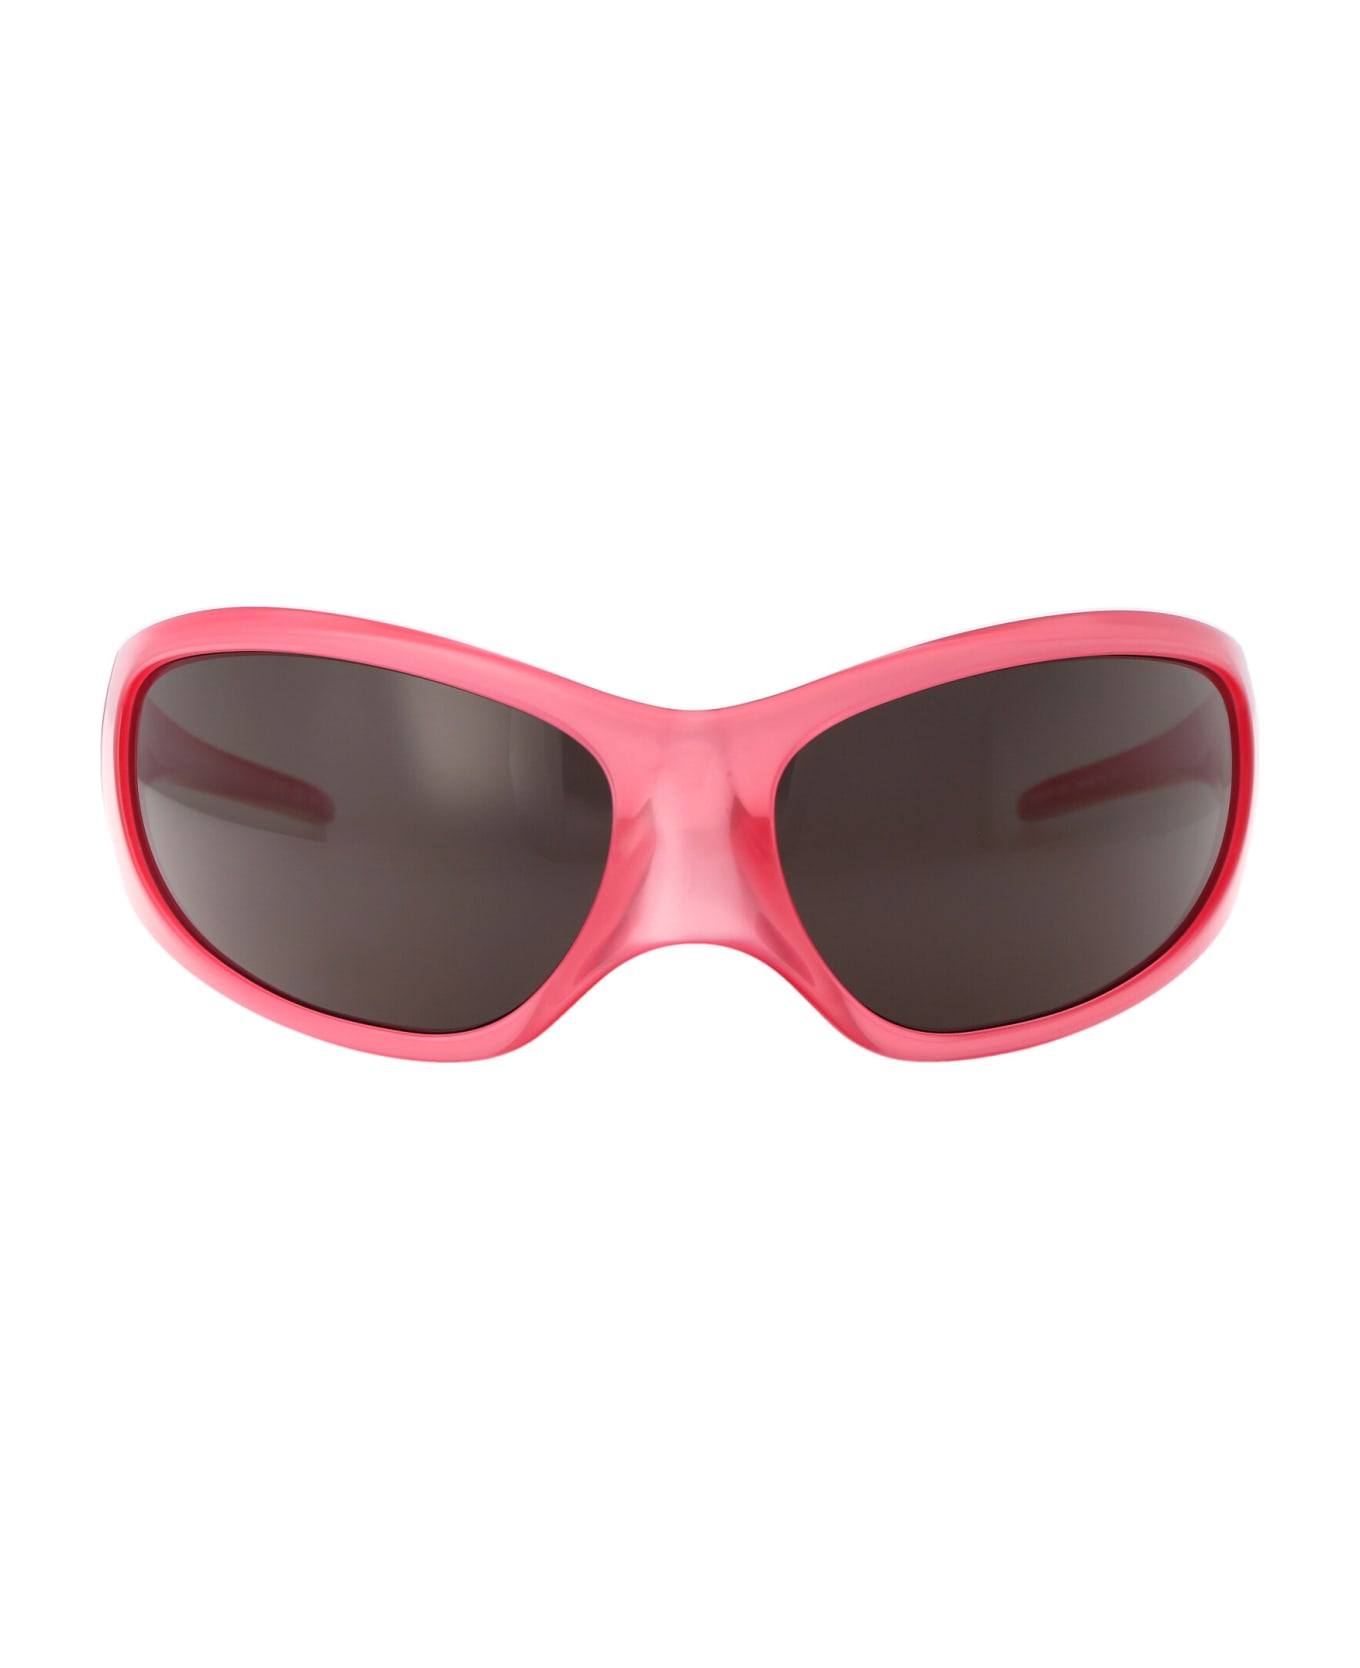 Balenciaga Eyewear Bb0252s Sunglasses - 002 PINK PINK GREY